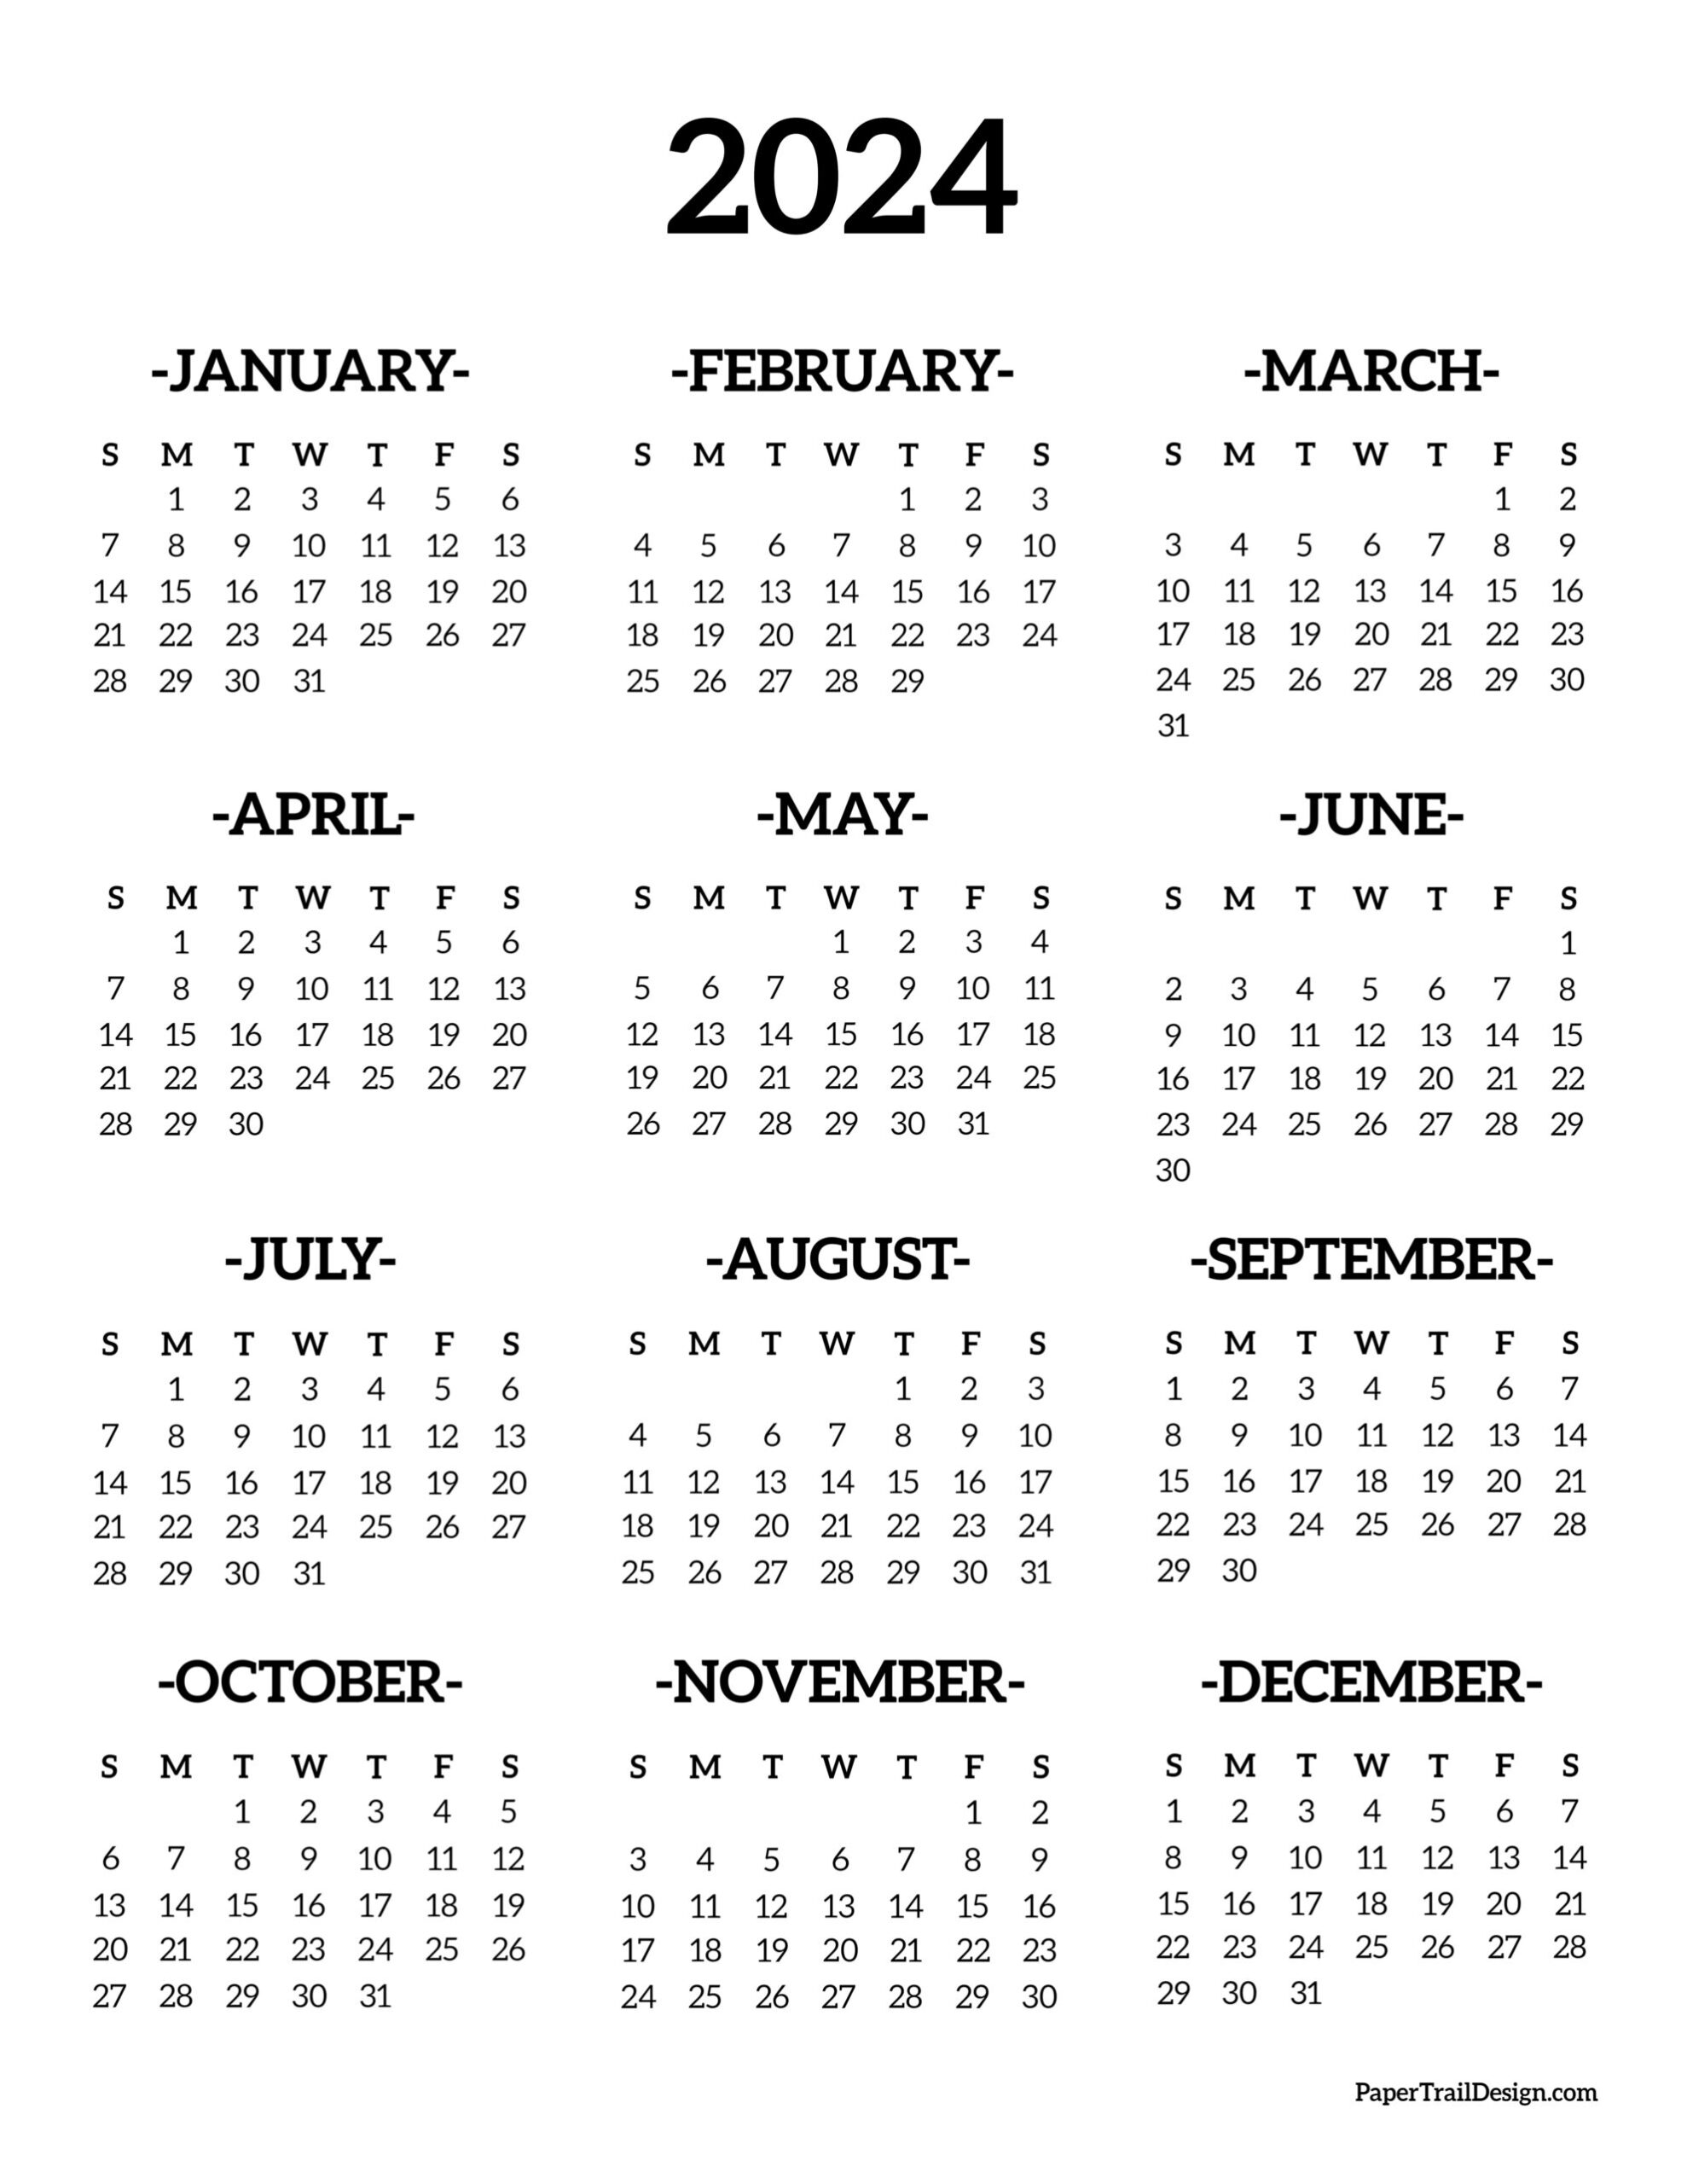 Calendar 2024 Printable One Page - Paper Trail Design for 2024 Calendar Printable Template